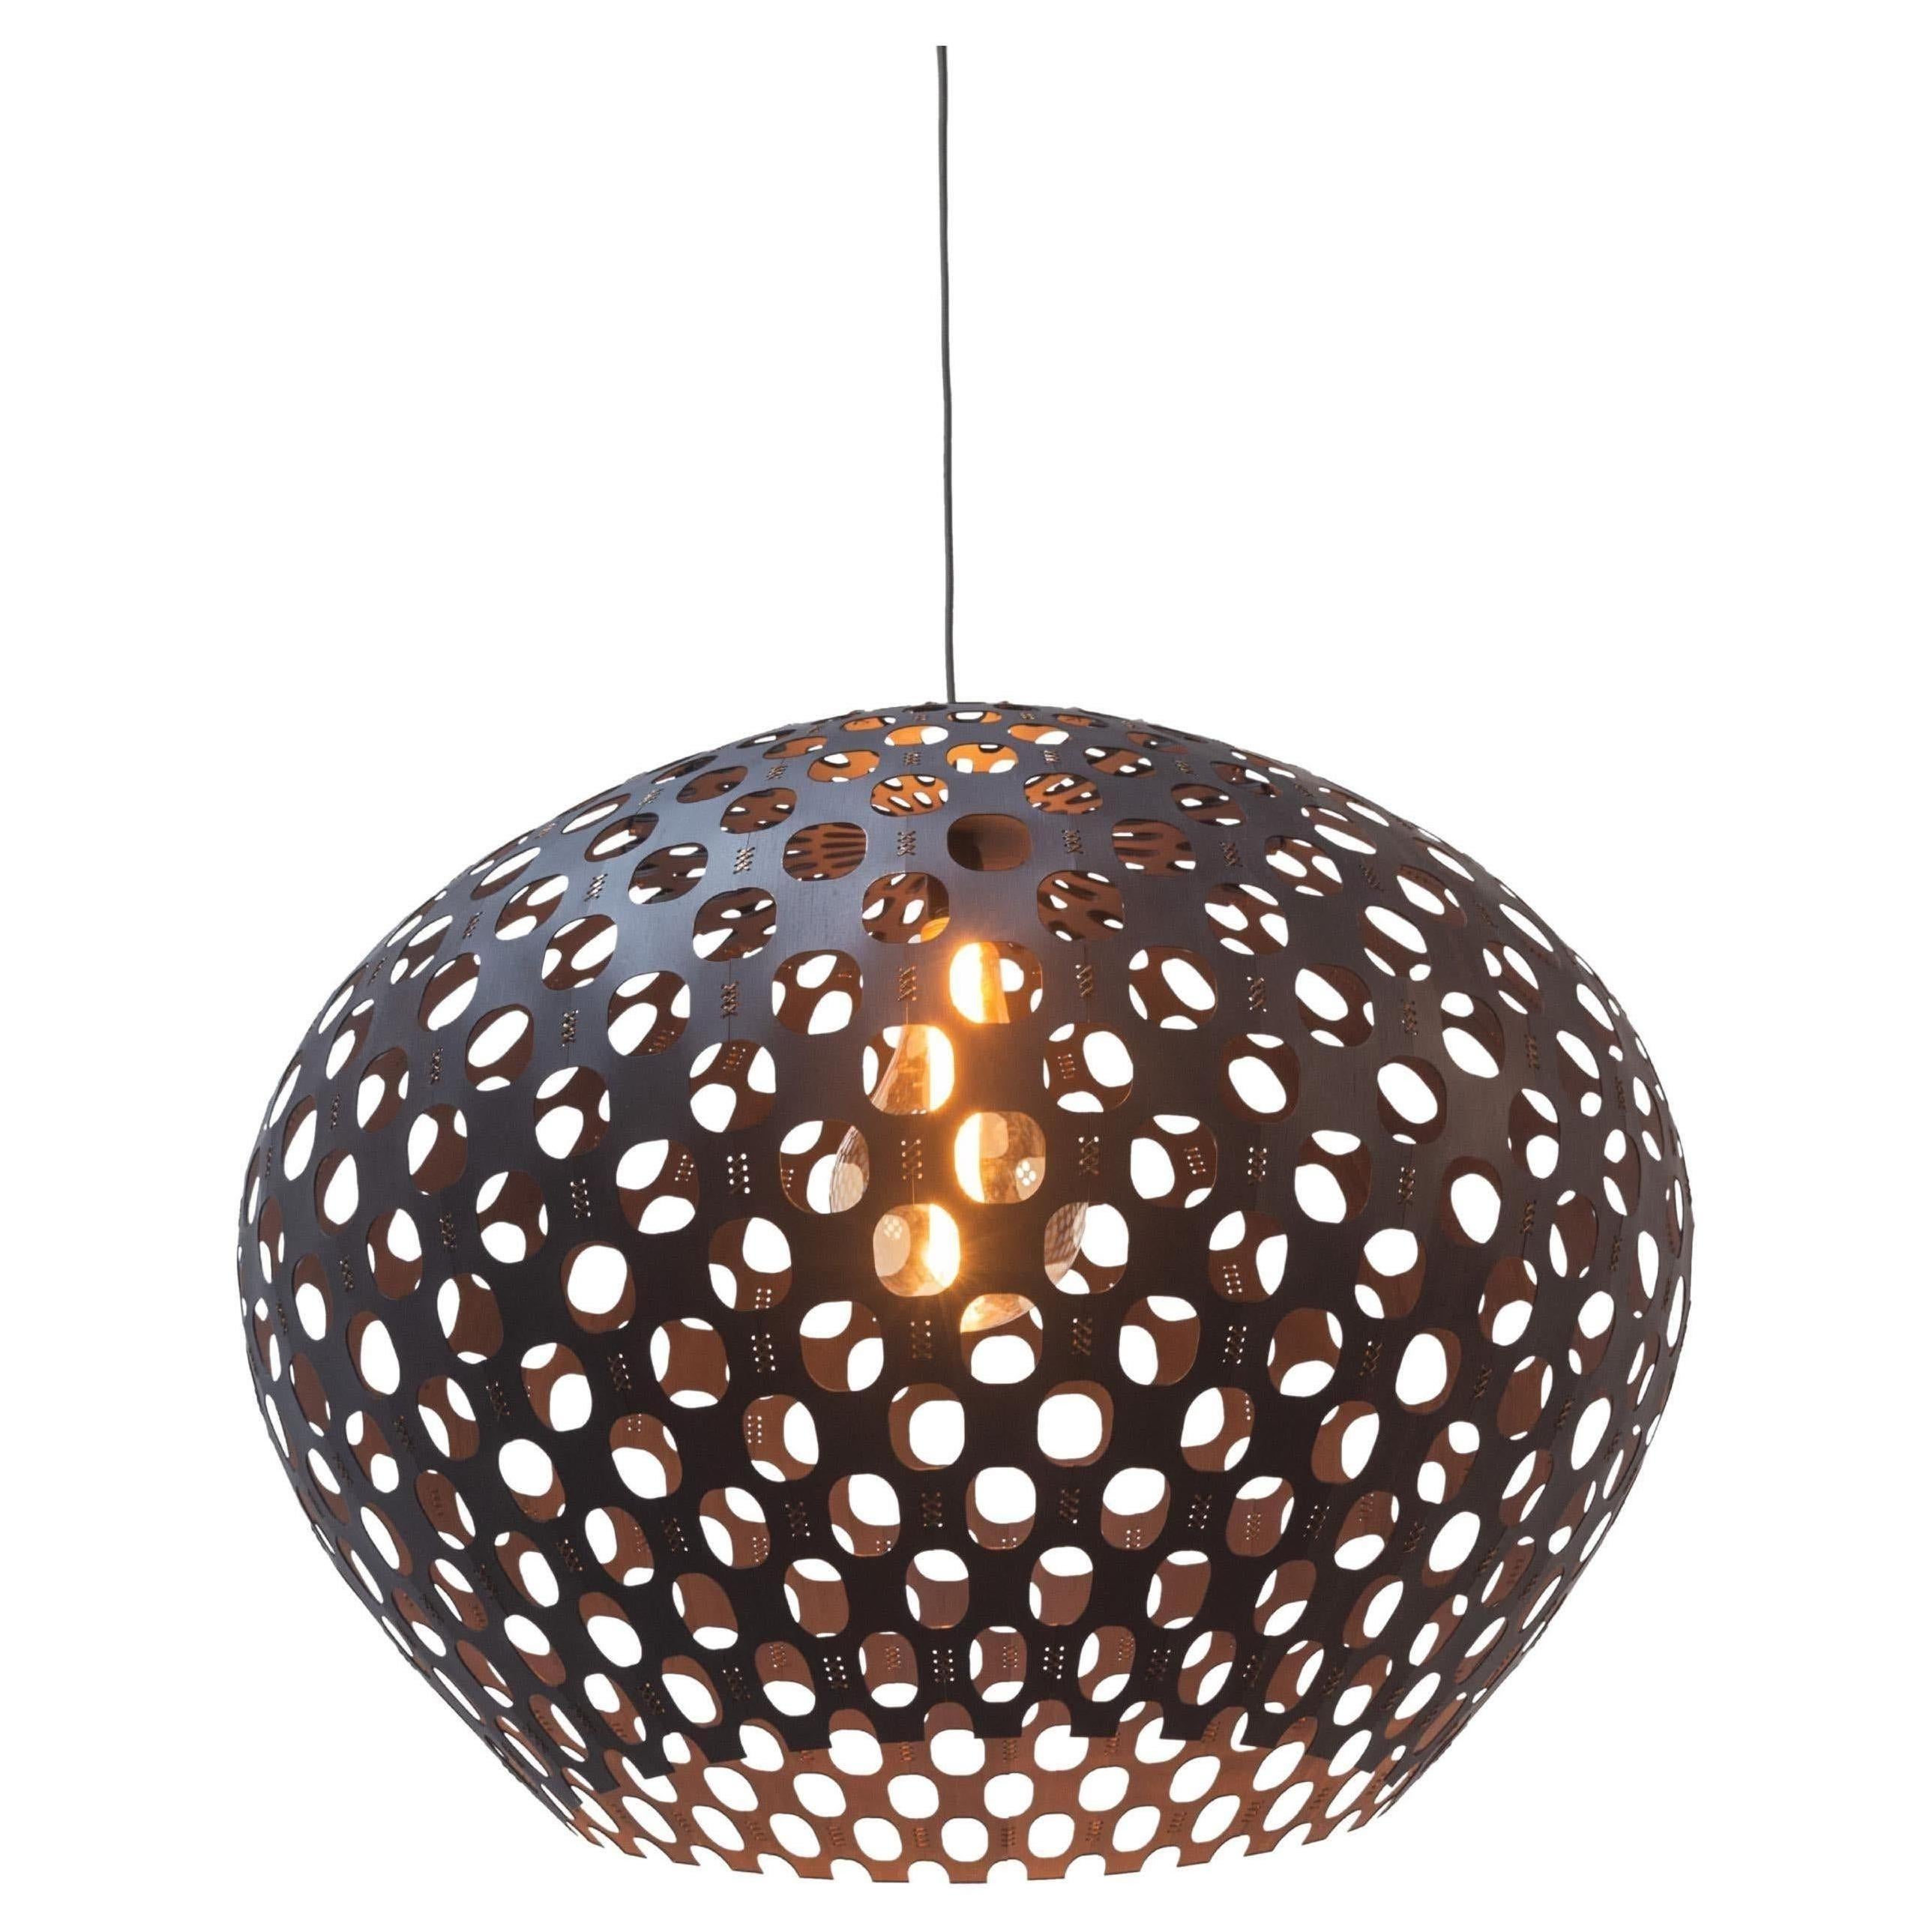 Panelitos Sphere Lamp Medium by Piegatto, une lampe sculpturale contemporaine en vente